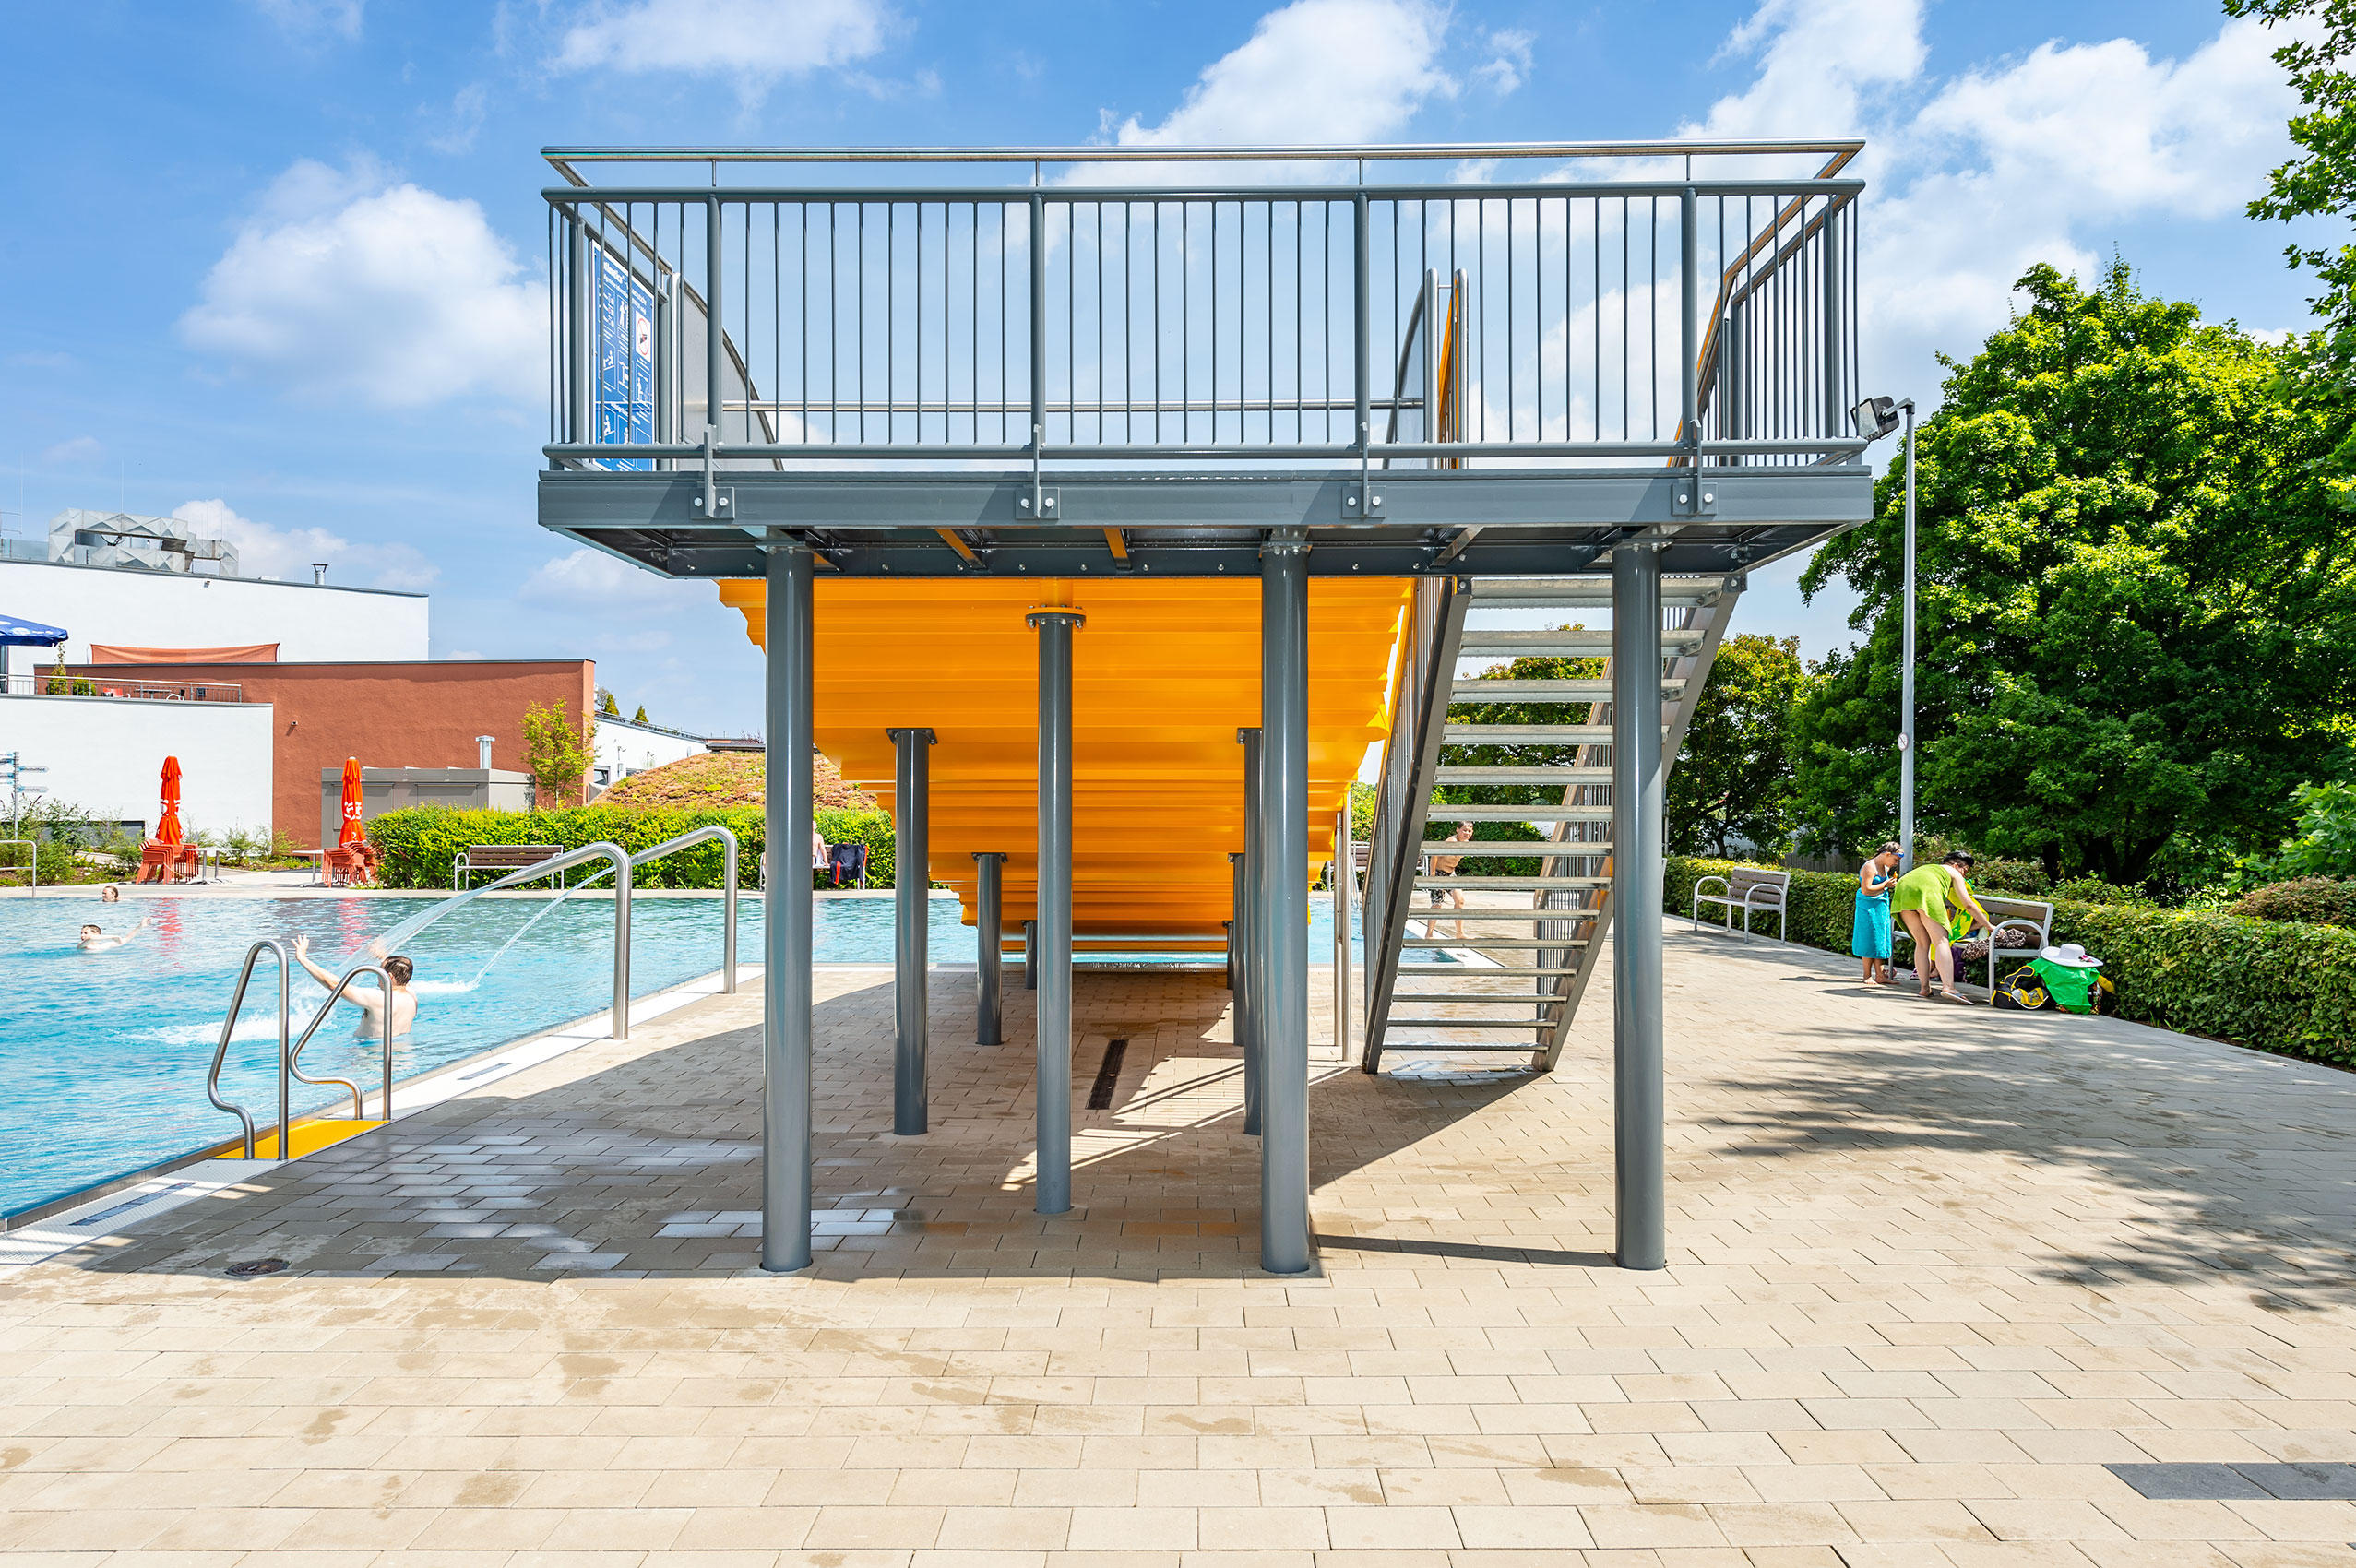 atlantics stainless steel slides panoramabathroom georgsmarienhuette niethesaxony boxwater non swimmer pool 168169 Gelänthe Treppe